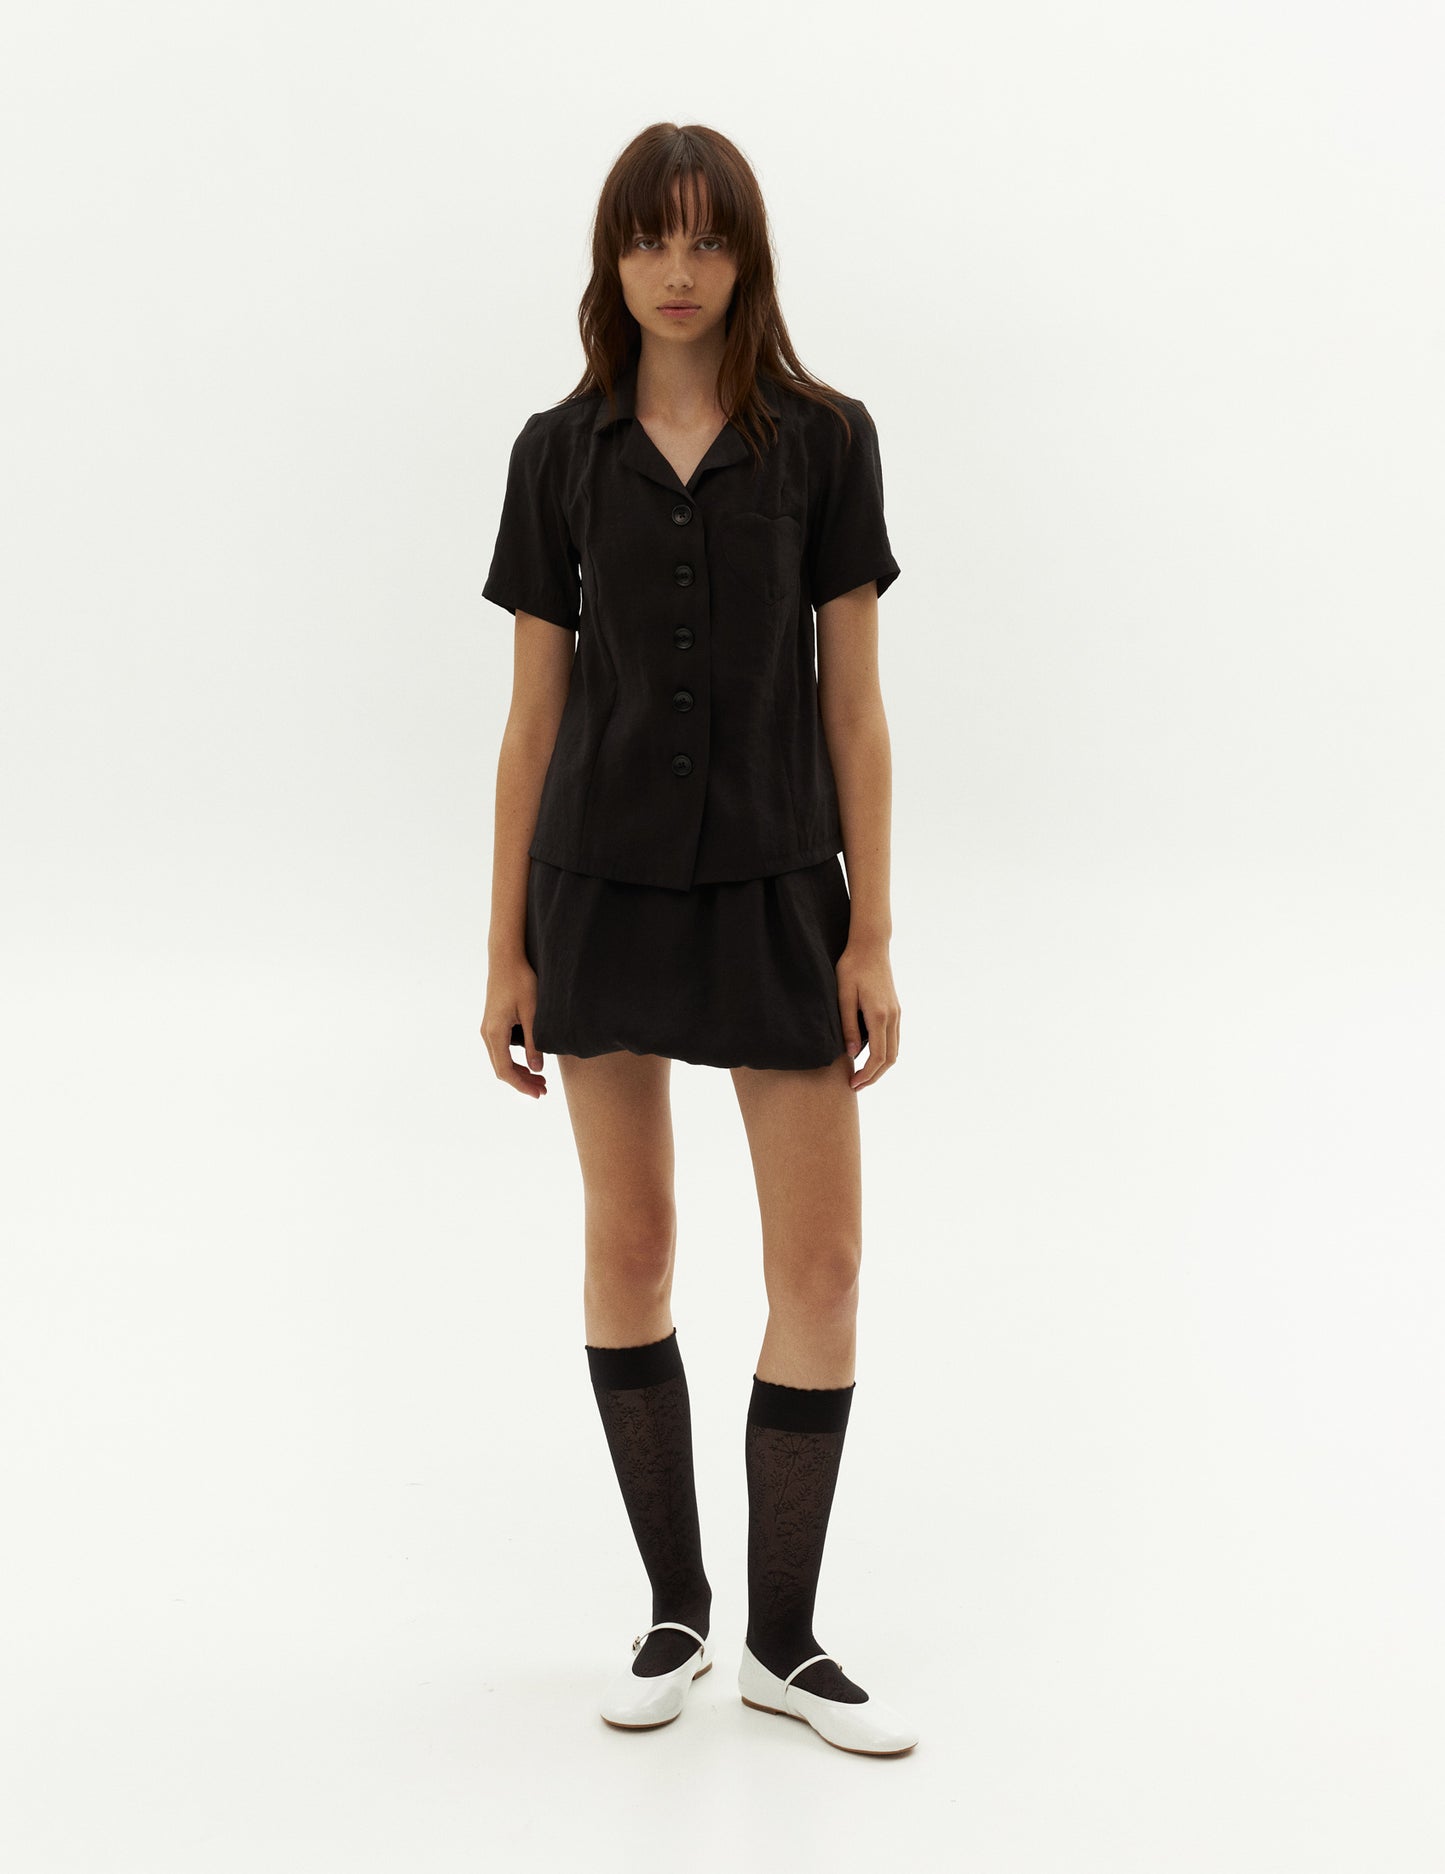 Balloon Short Skirt — Black color from clothing brand FORMA. Чорна коротка спідниця від бренду ФОРМА